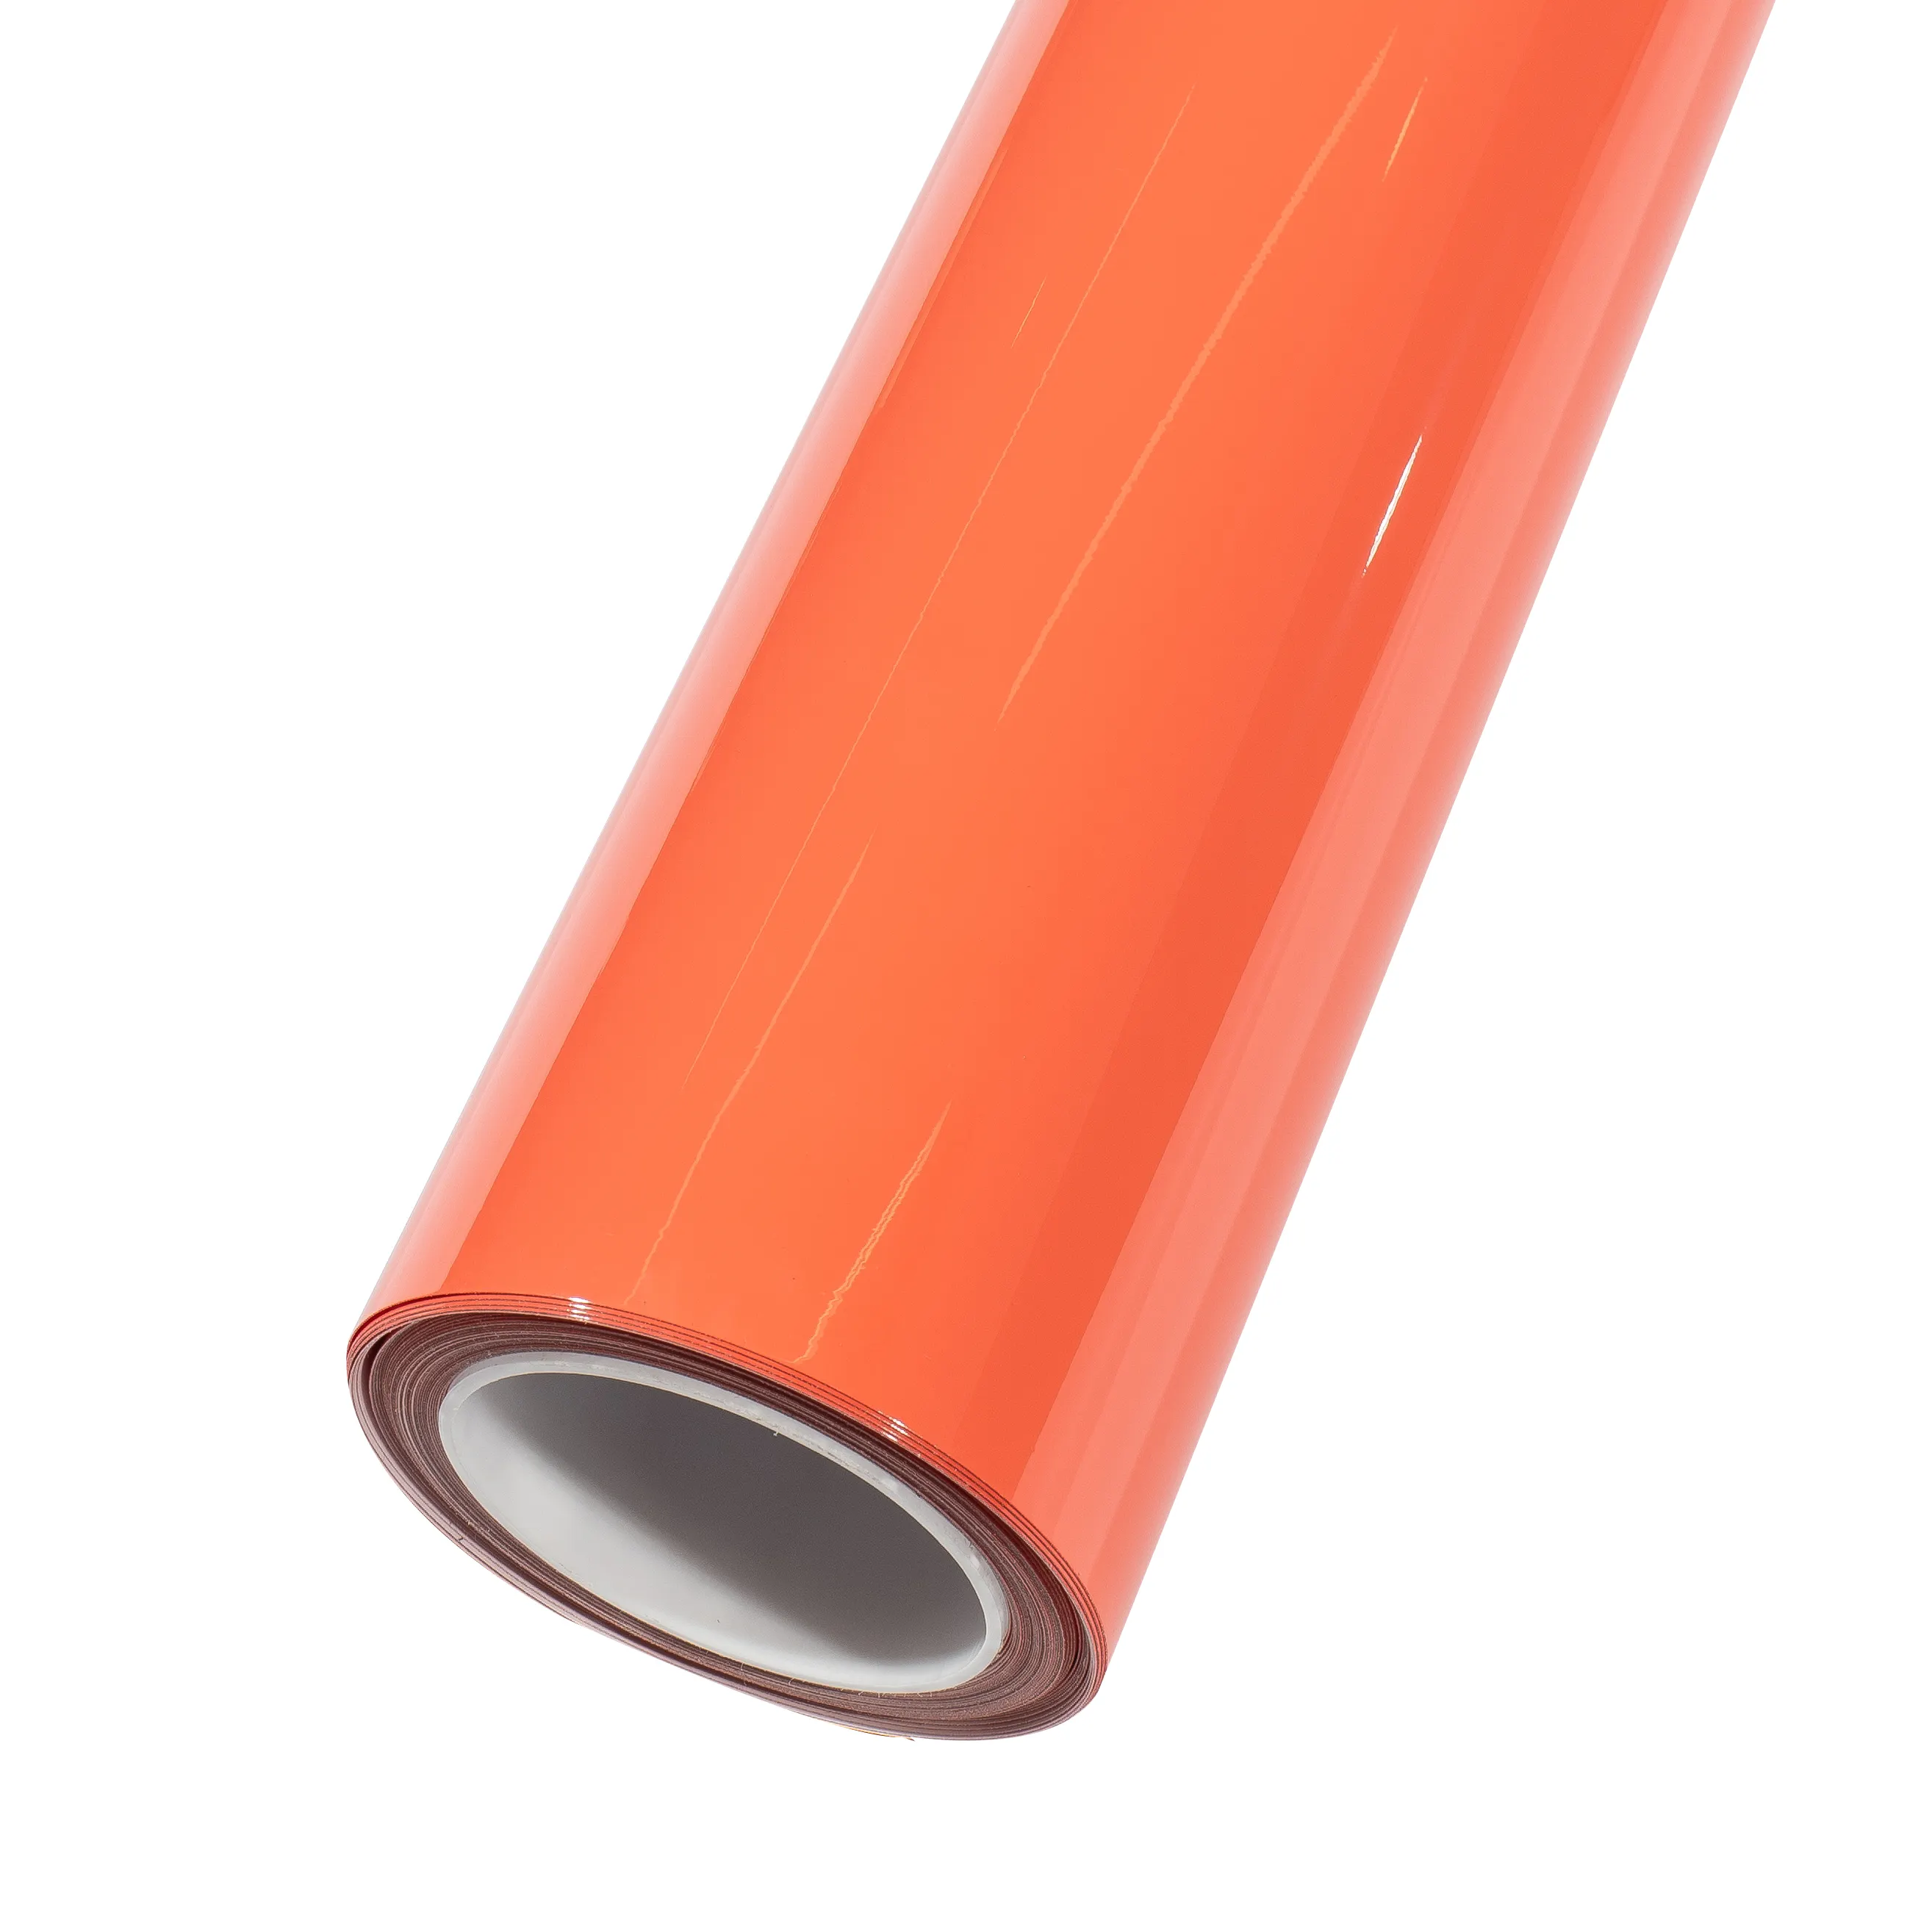 Directo de fábrica 1,52*17 Coral como naranja cristal Color película protección contra arañazos mancha Pvc coche vinilo embalaje